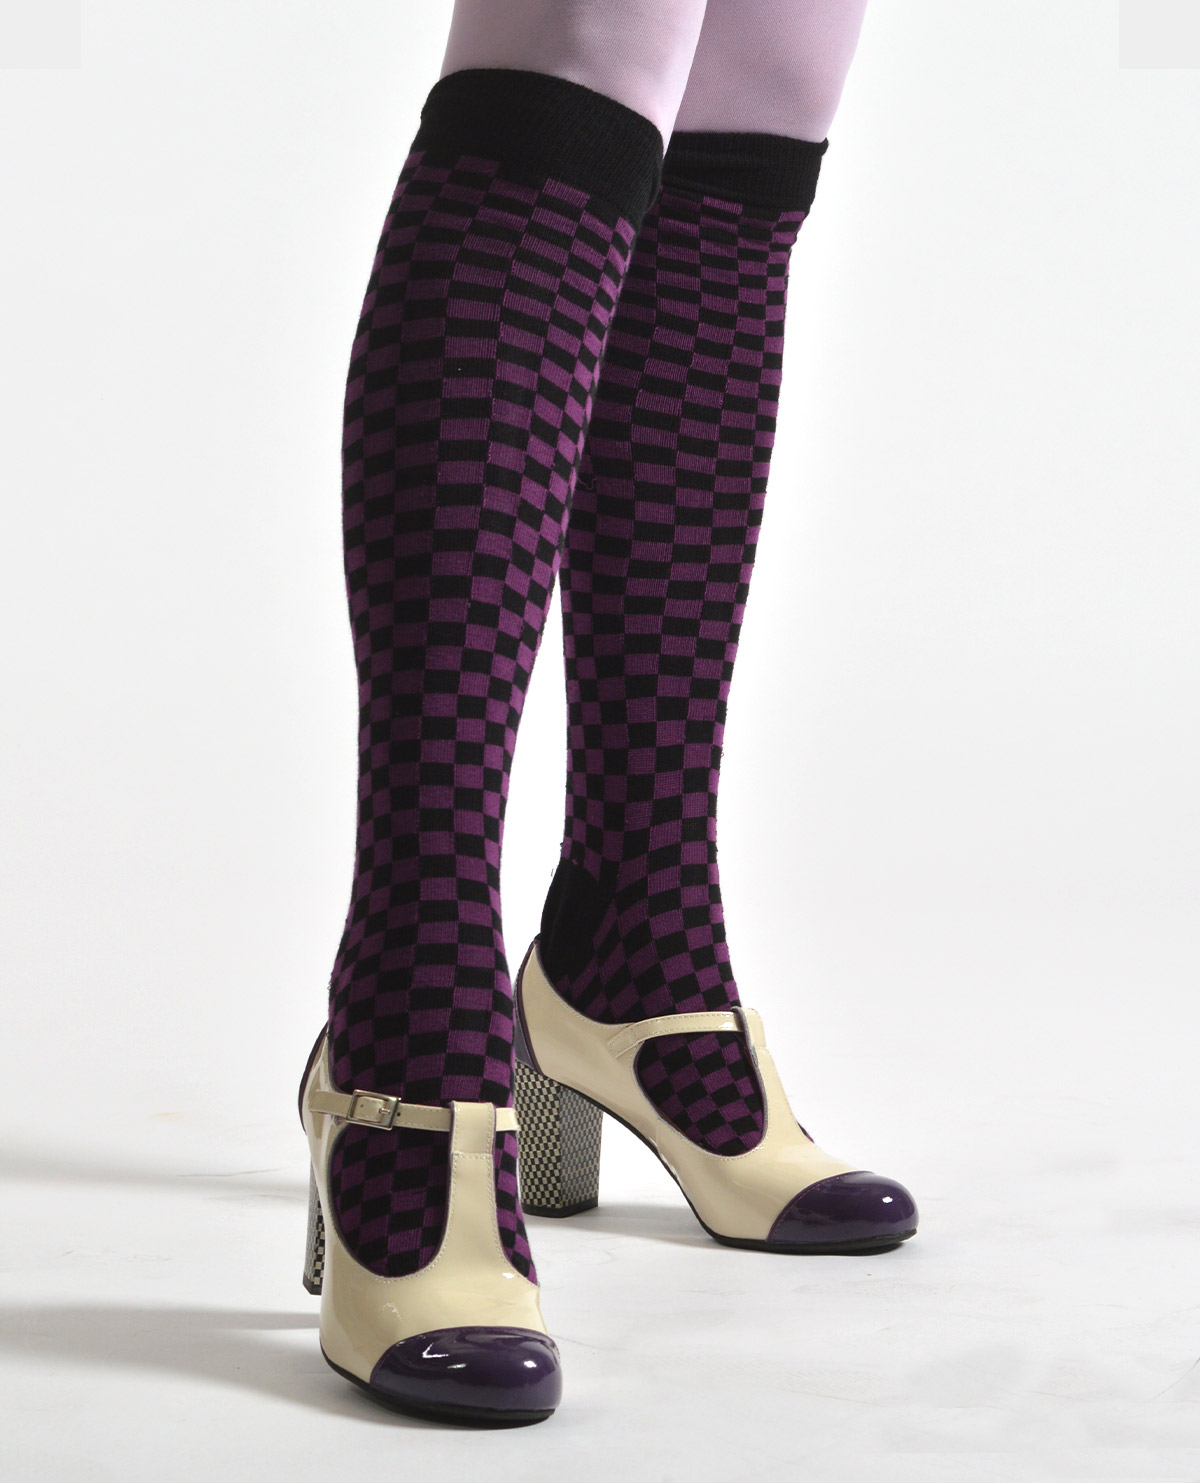 Black Purple Square Knee High Socks- ladies vintage retro 60s – 70s style –  Mod Shoes